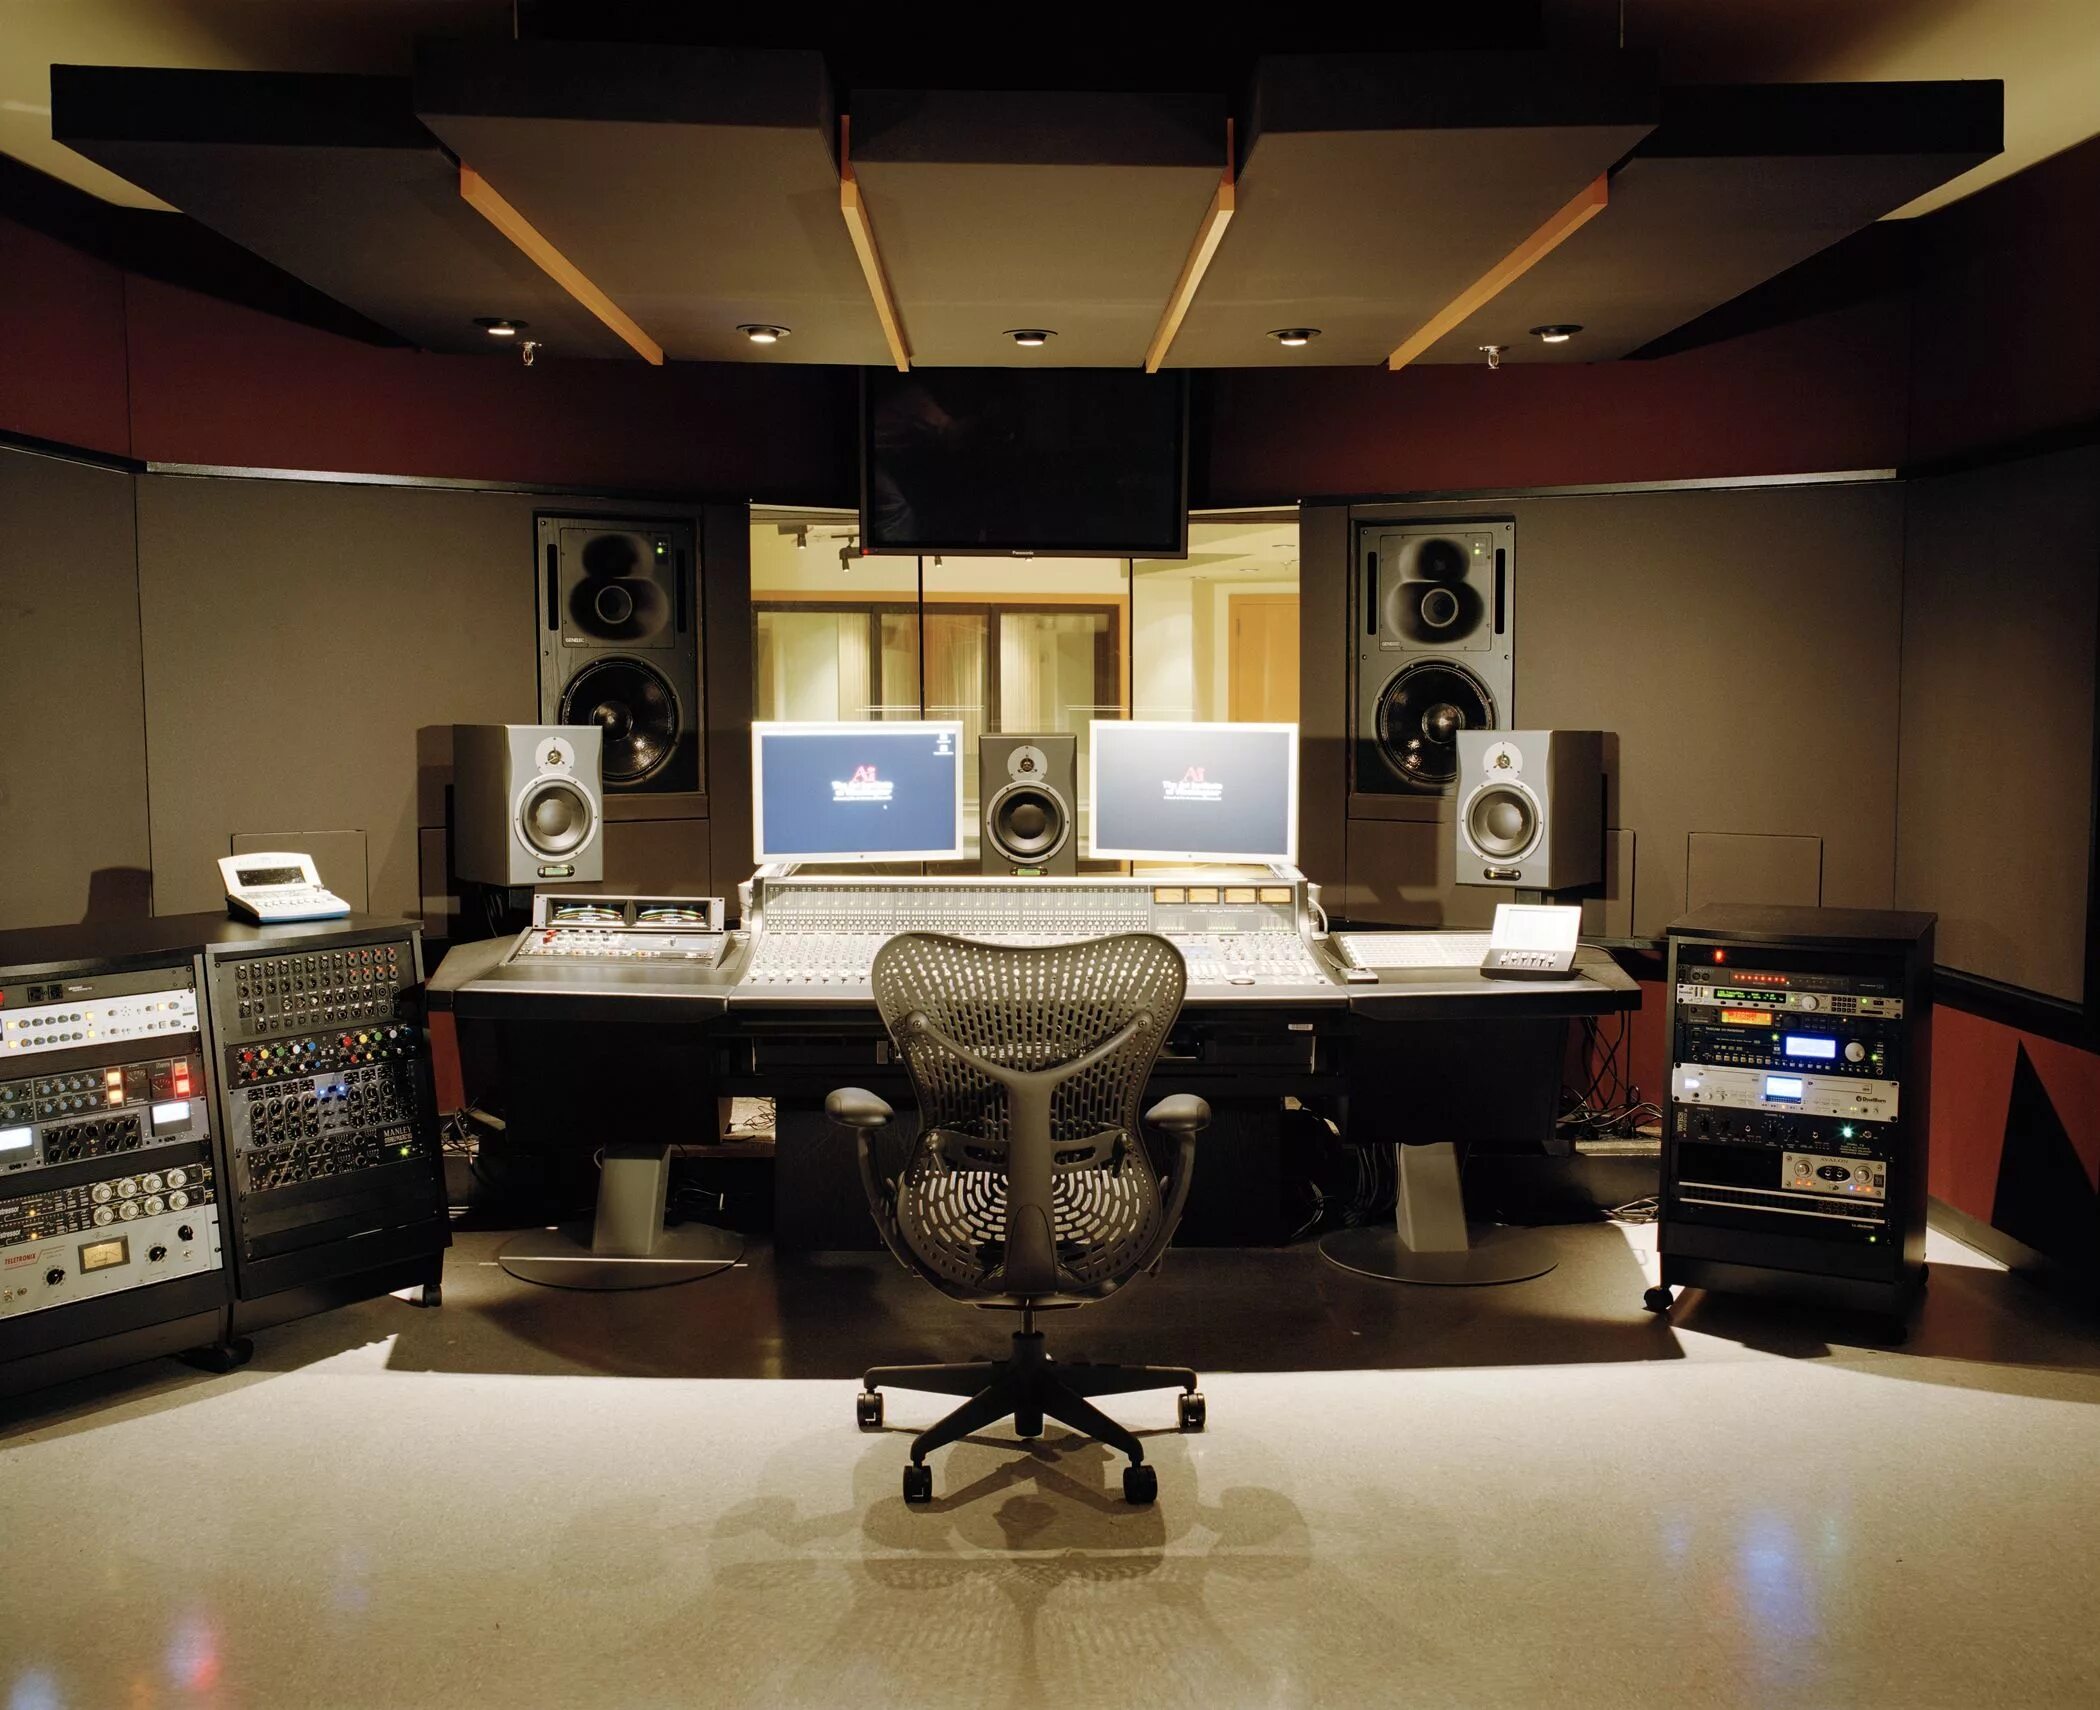 Professional record. Музыкальная студия. Студия звукозаписи. Профессиональная музыкальная студия. Комната студия звукозаписи.